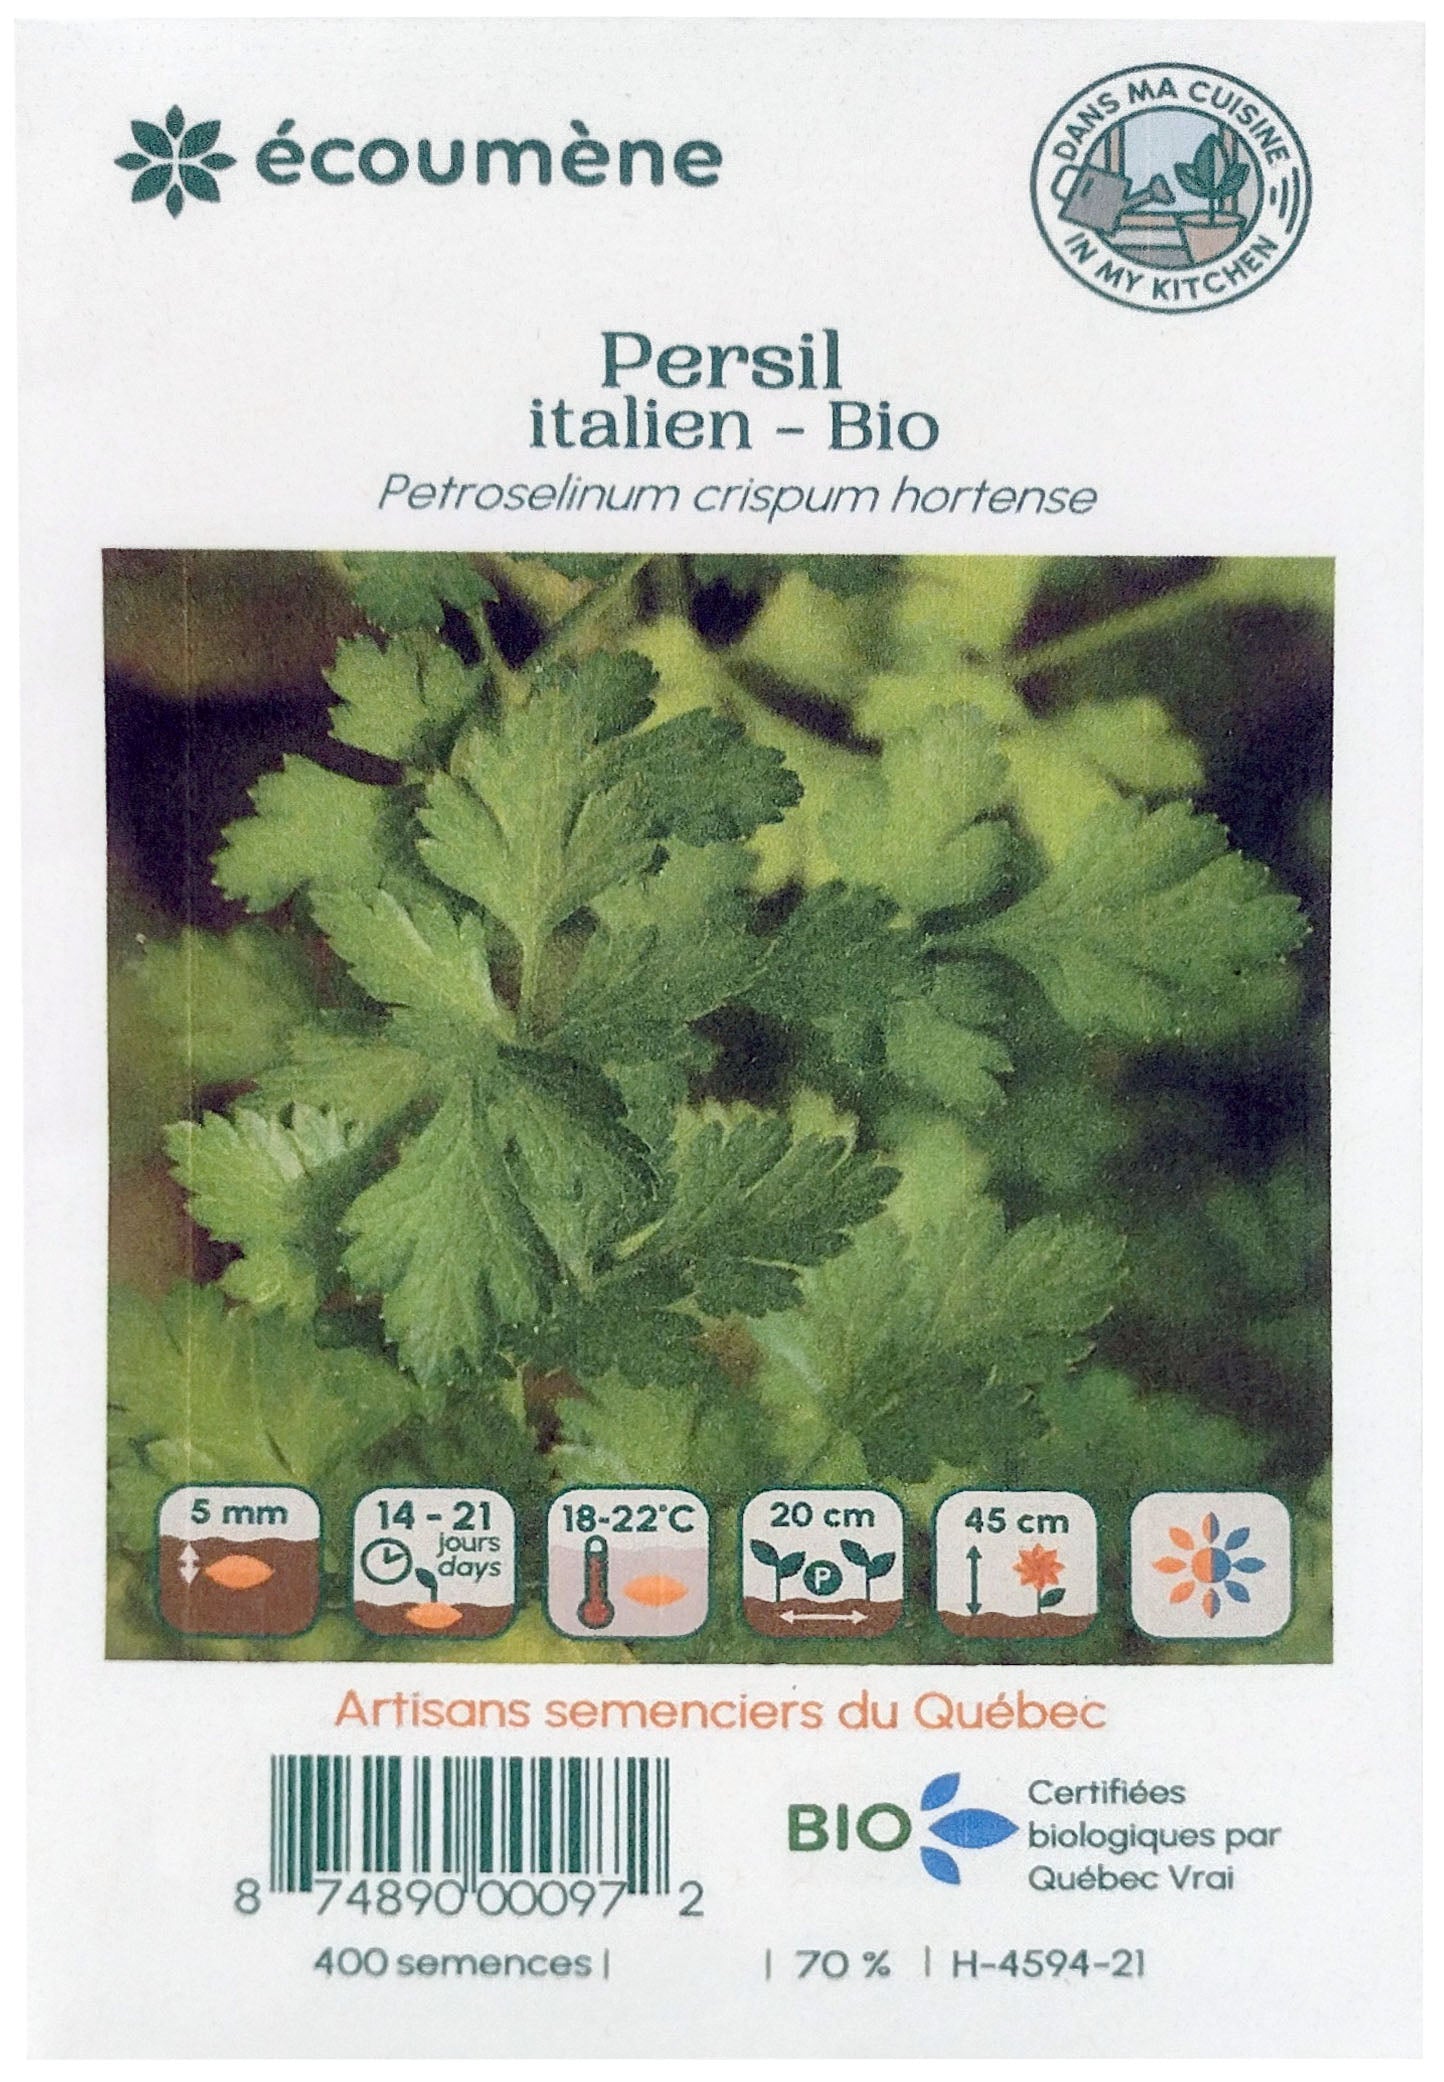 Semence persil italien bio (un)